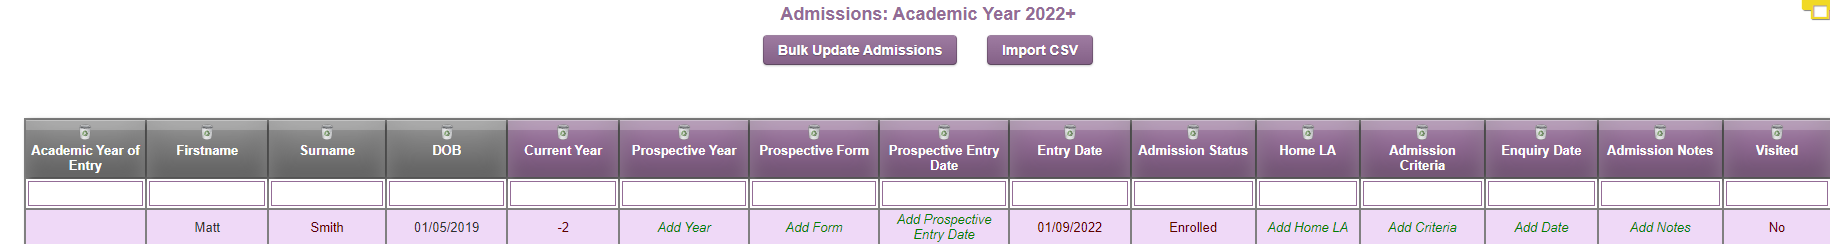 bulk update admissions.png